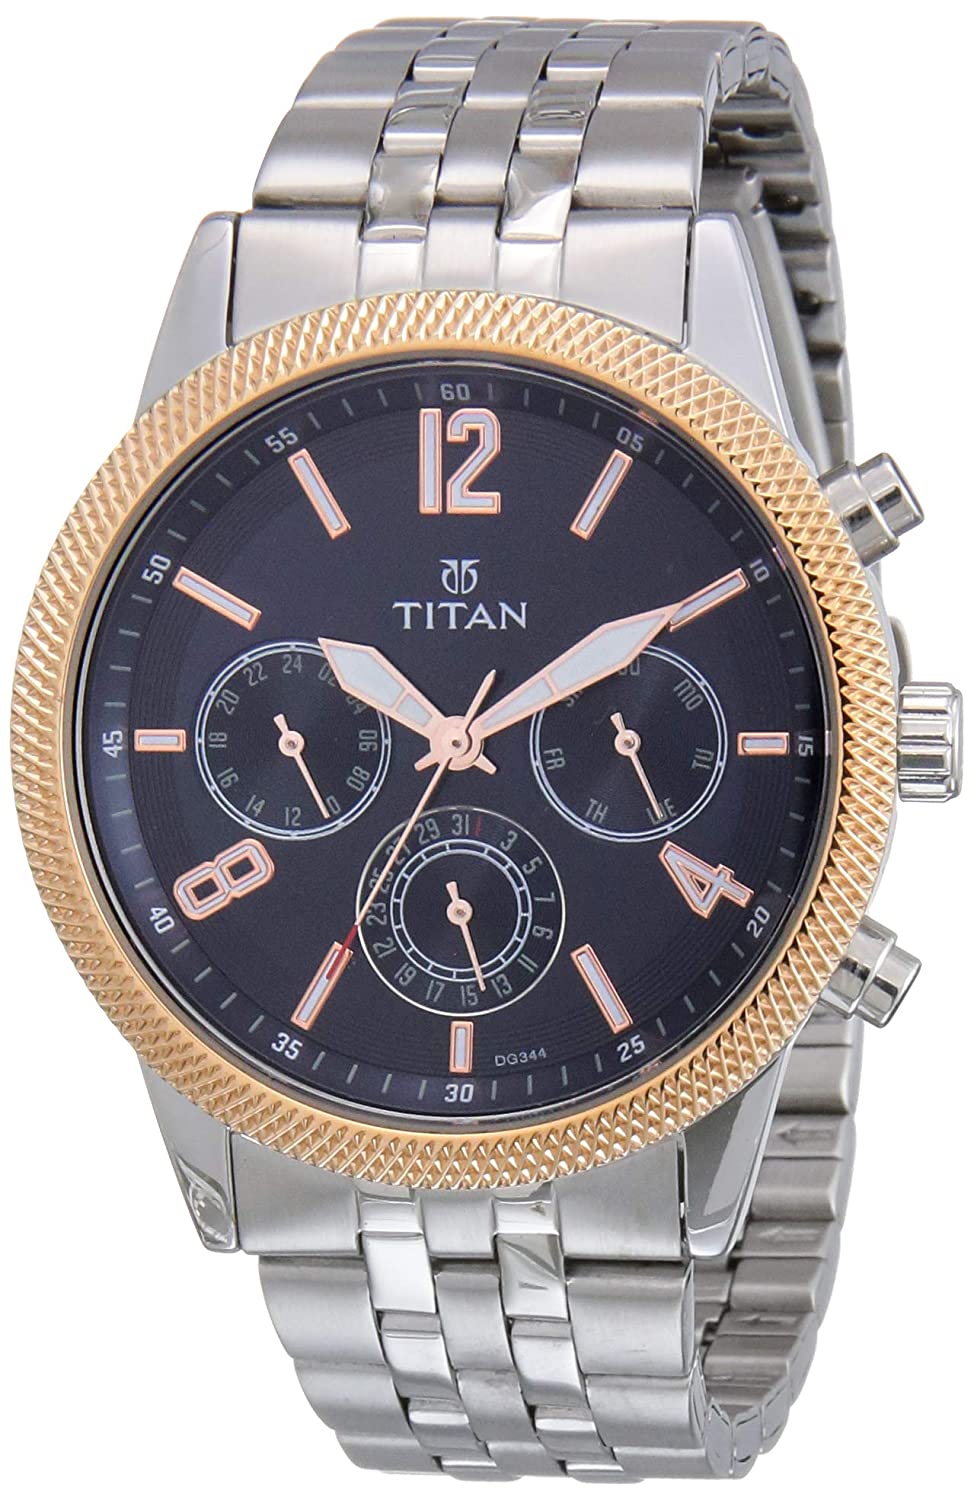 Titan Chronograph Men's Watch (Silver Colored Strap) - The Dashing Man